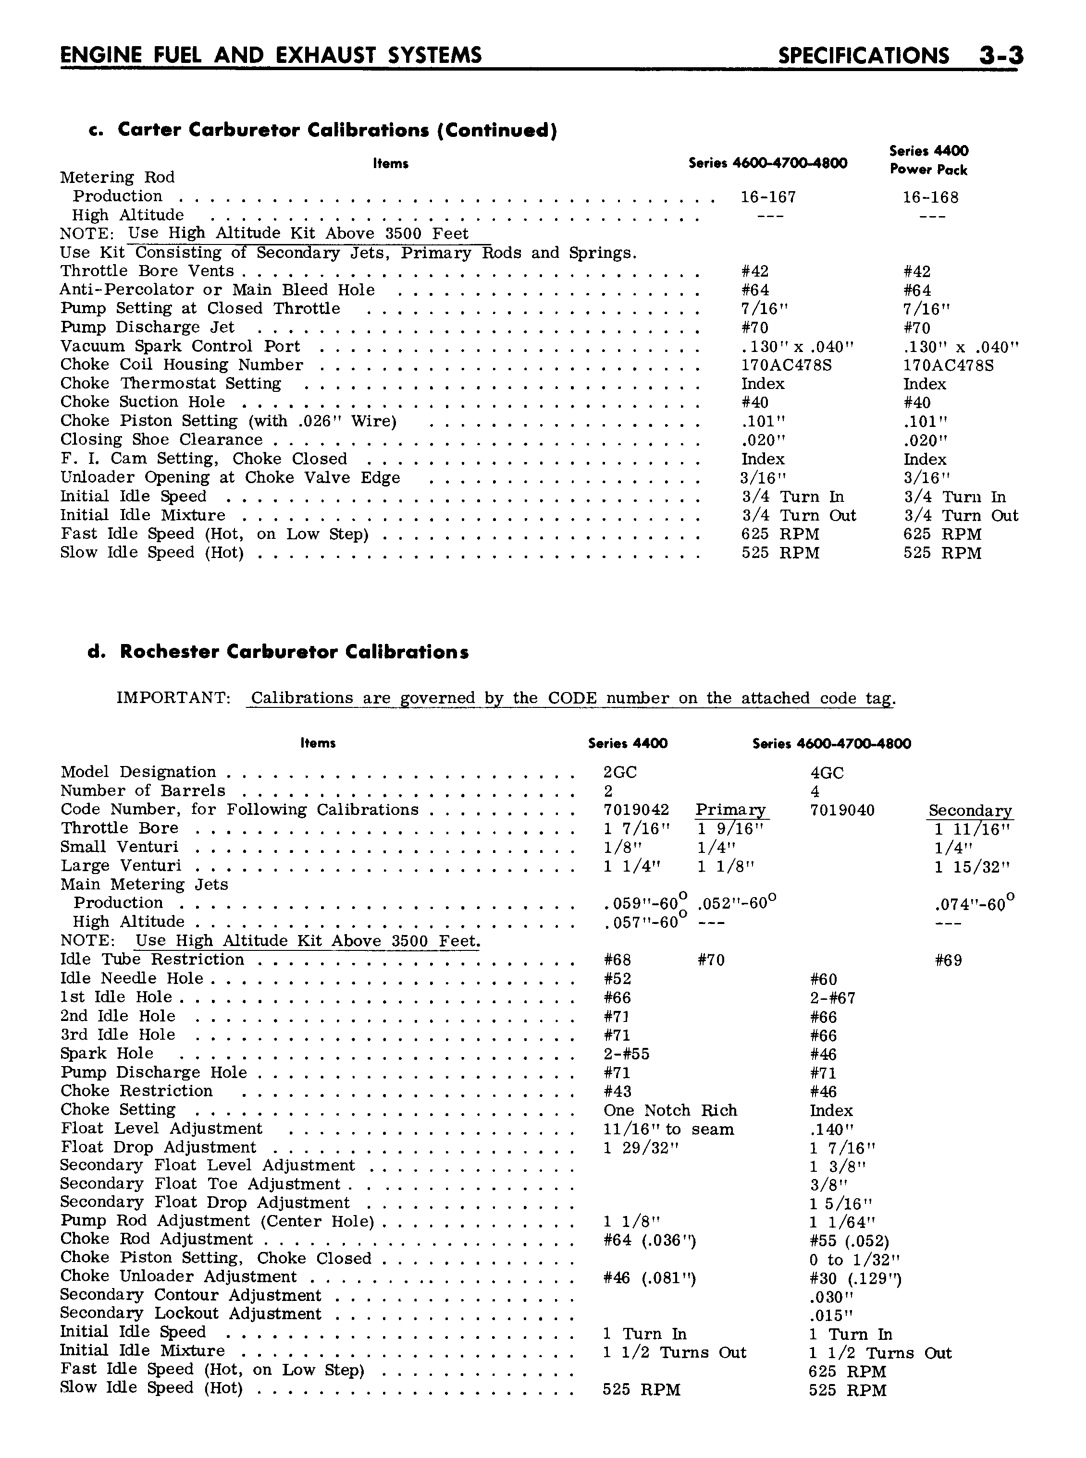 n_04 1961 Buick Shop Manual - Engine Fuel & Exhaust-003-003.jpg